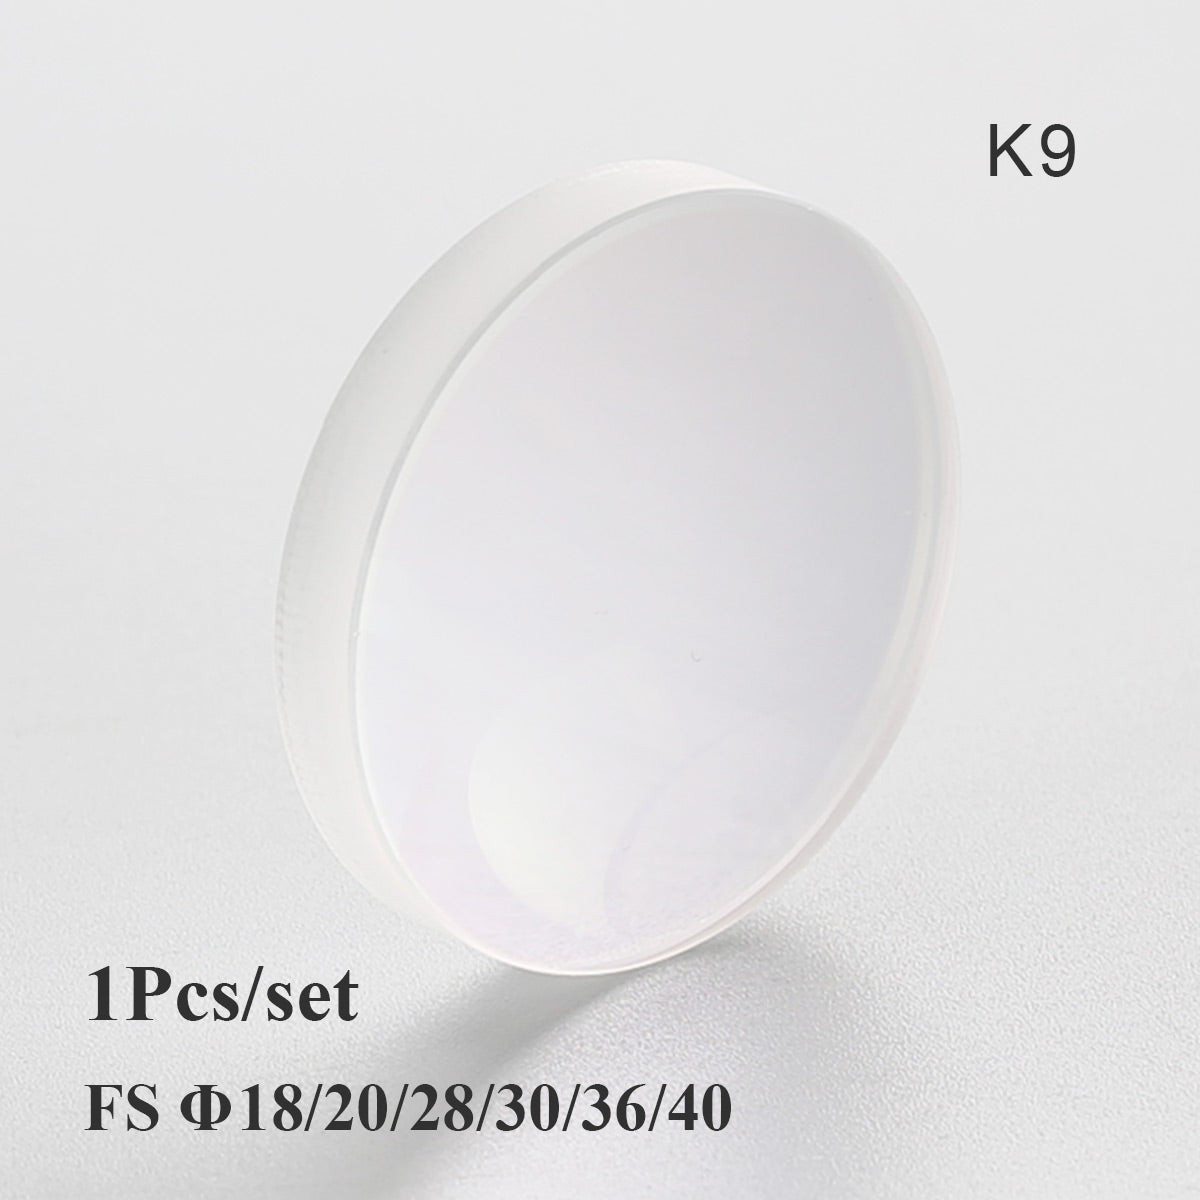 Startnow 1PC Glass K9 Fiber Laser Focus Collimator Lens D30 Concave Convex